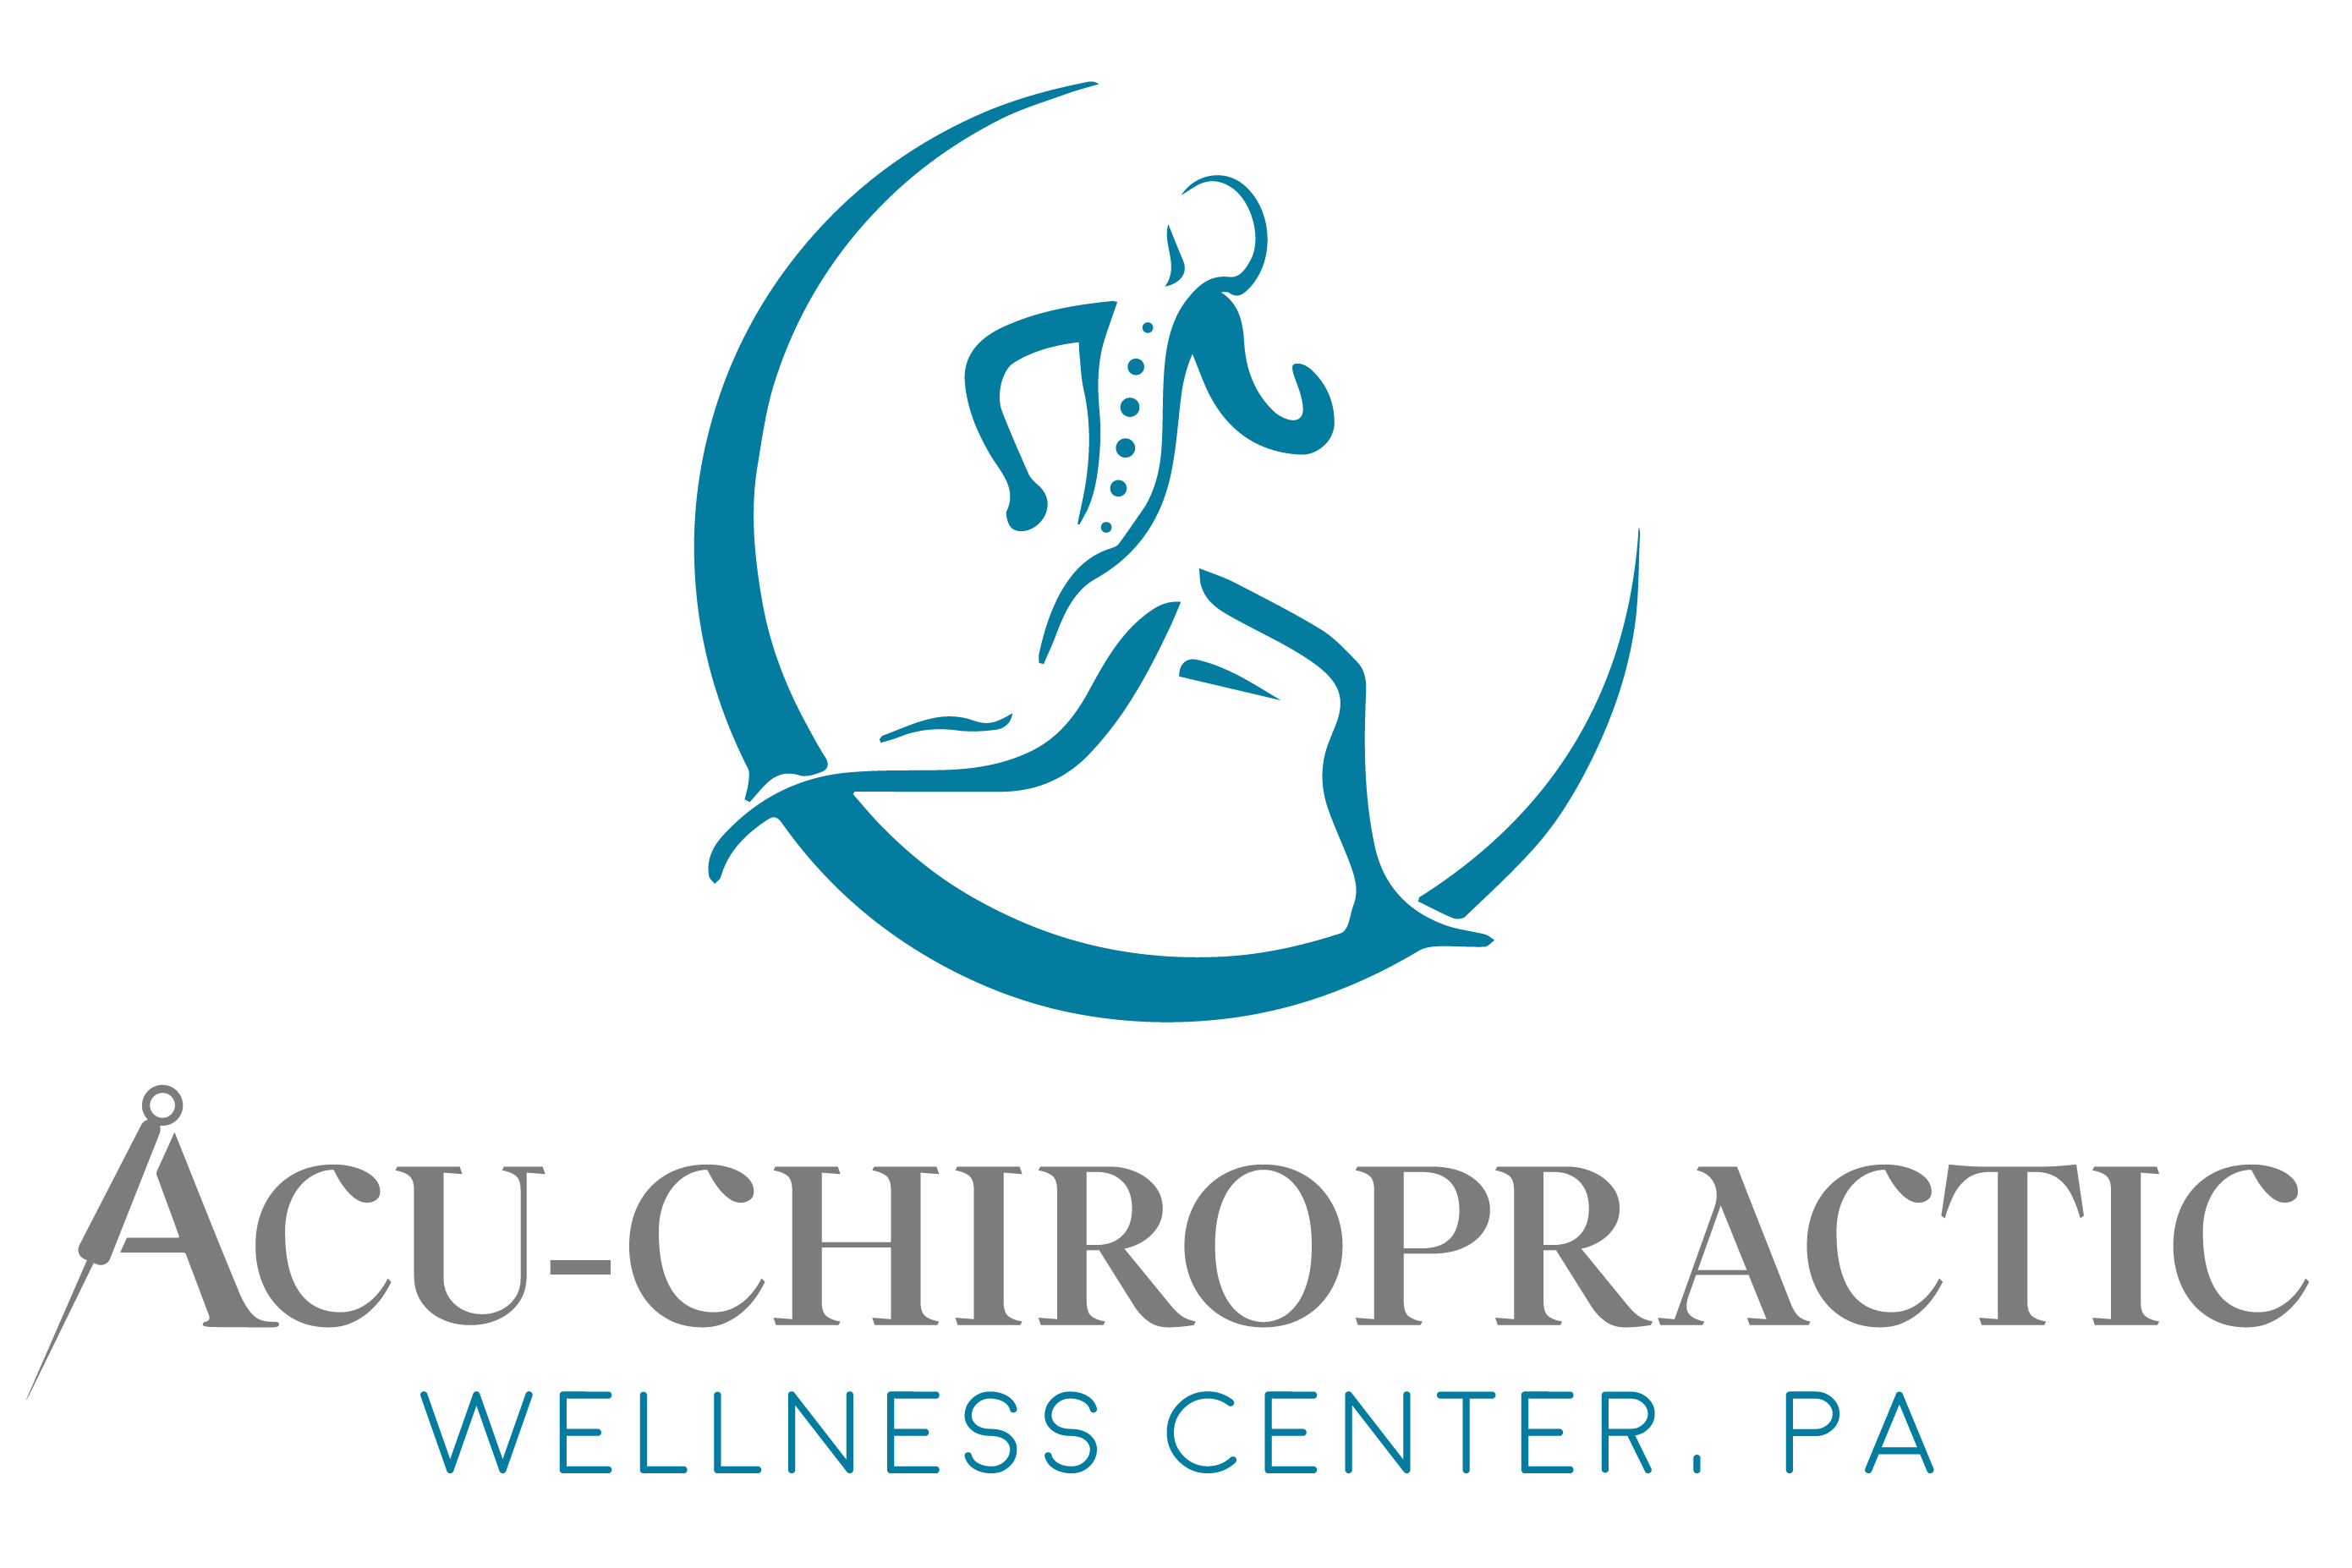 Acu-Chiropractic Wellness Center